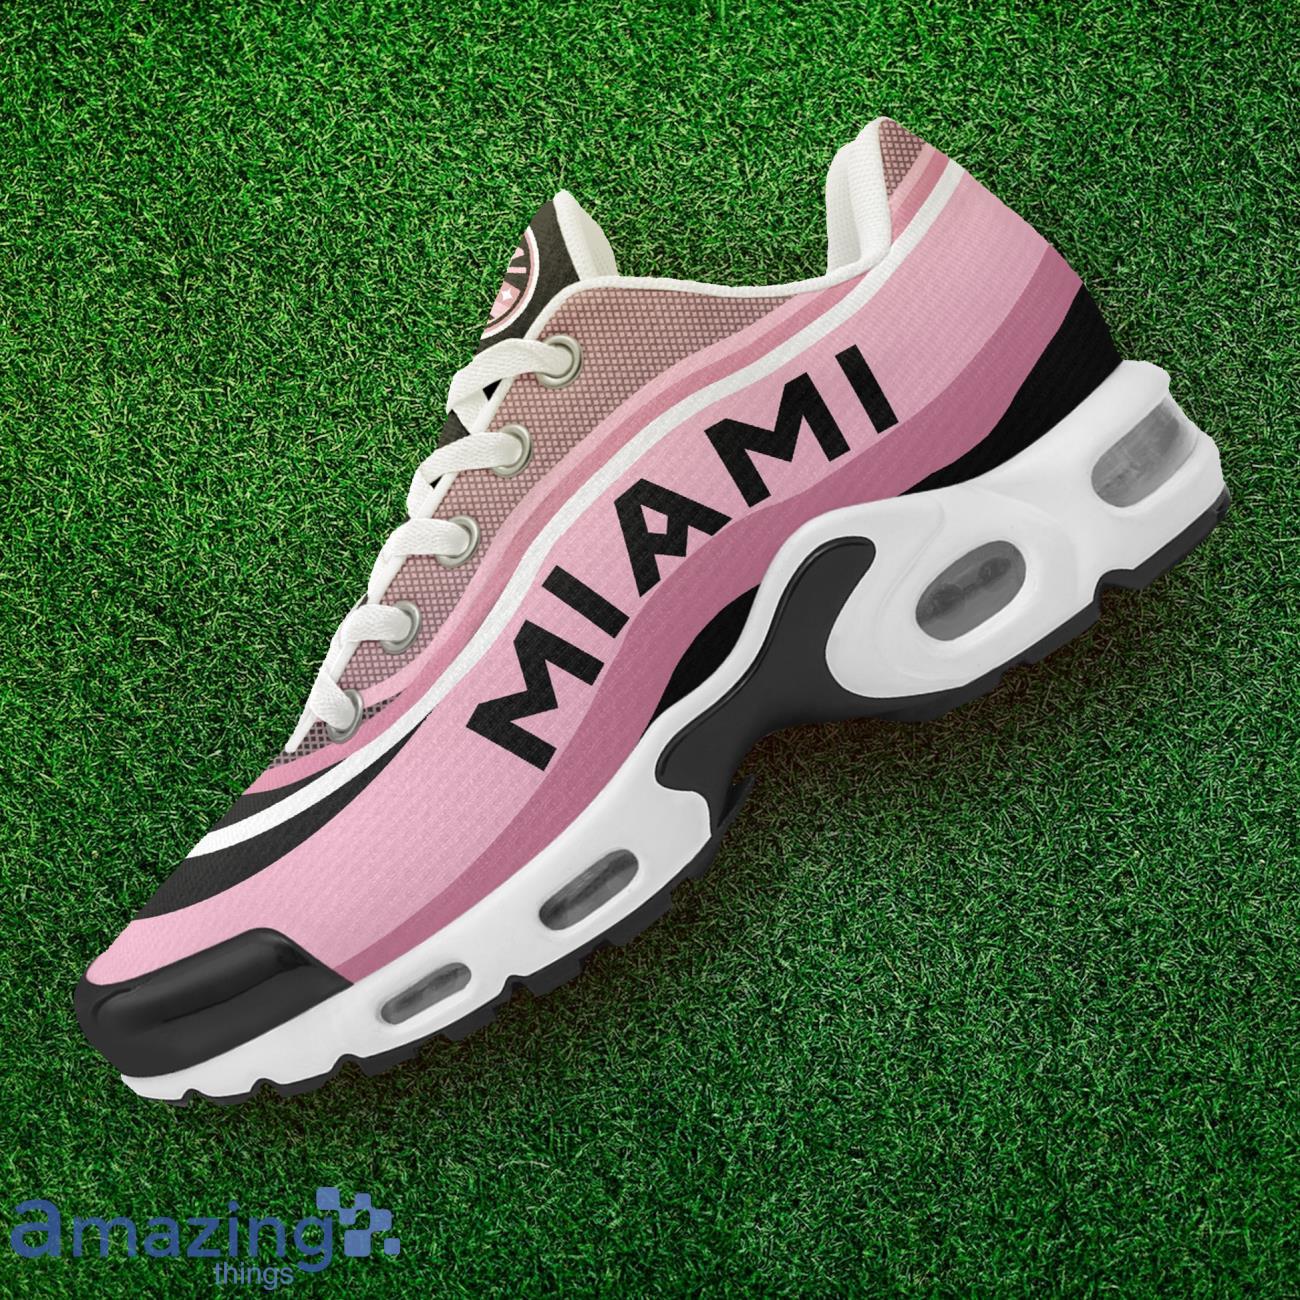 Miami Soccer Air Cushion Shoes Product Photo 1